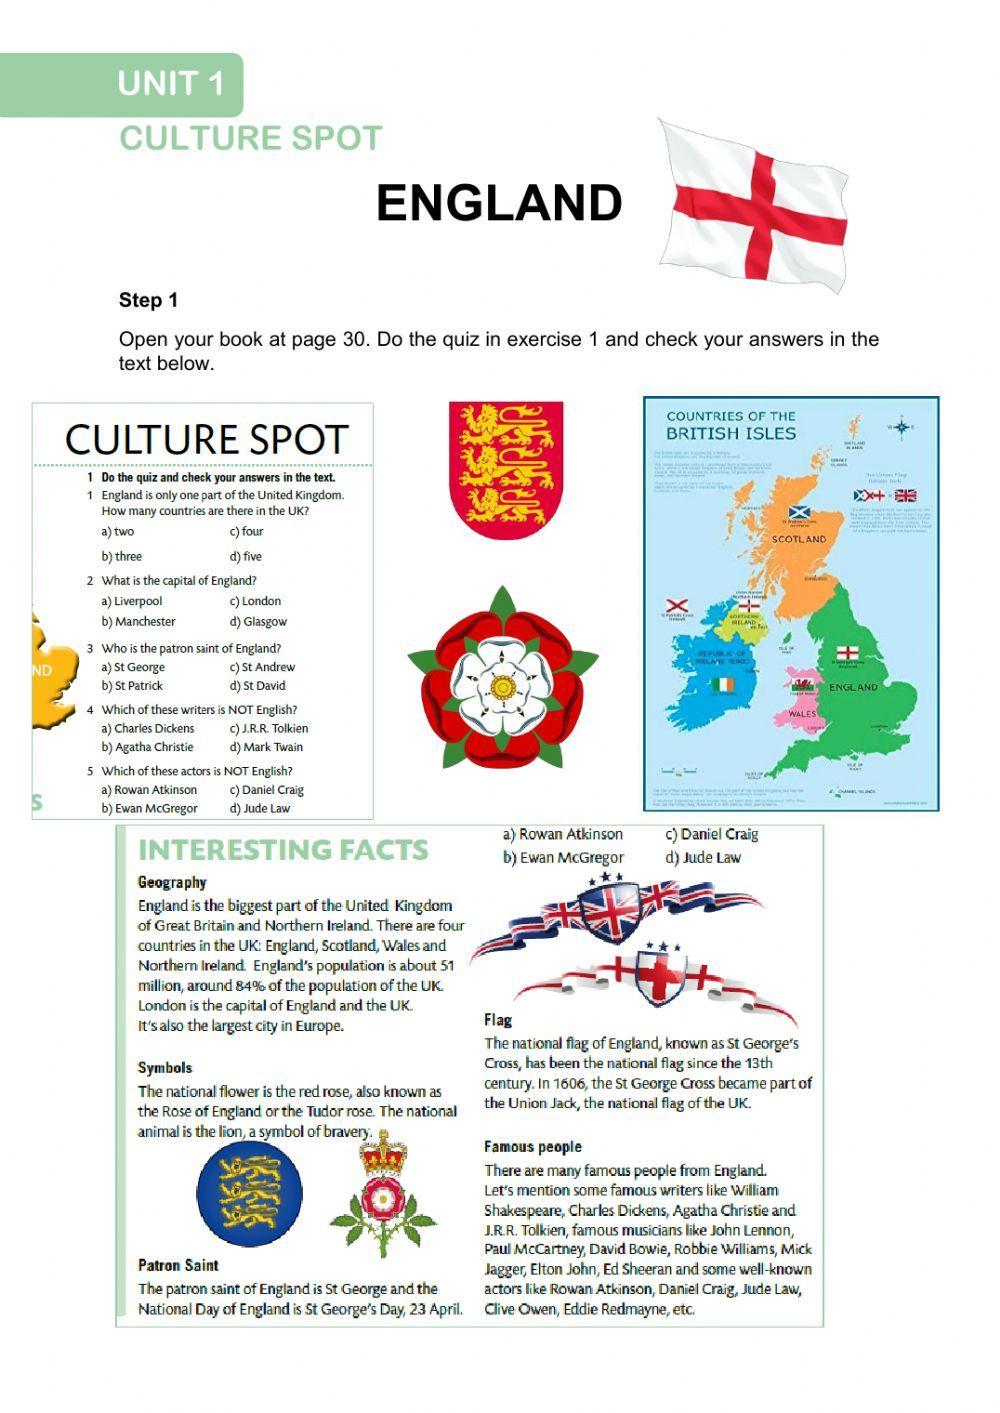 Culture spot 1 - england